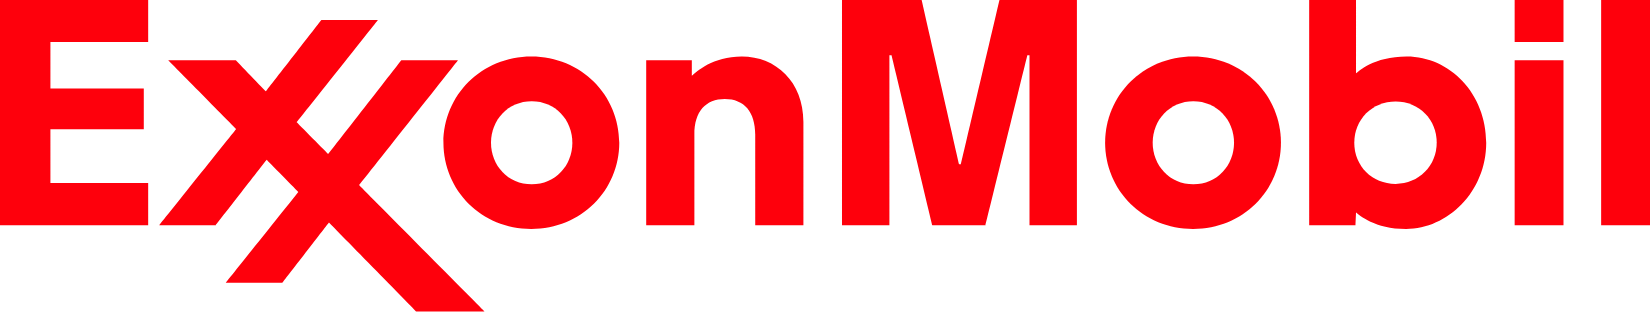 Exxon Mobil logo large (transparent PNG)